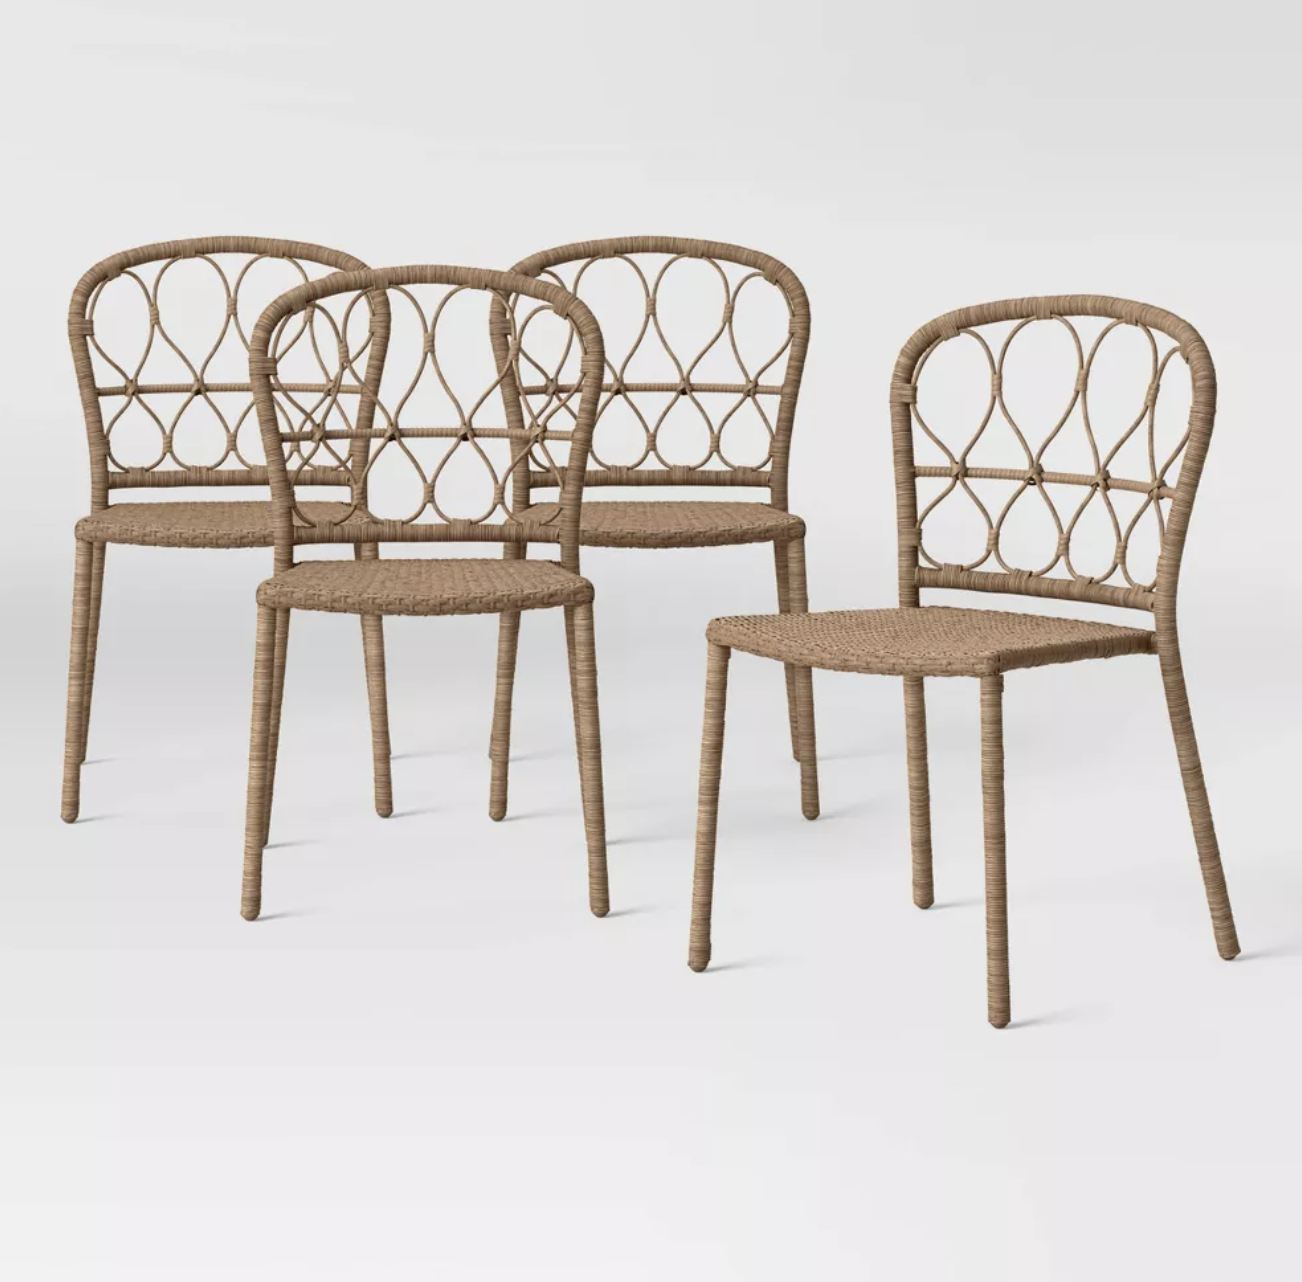 Britanna 4pk Wicker Rattan Chairs